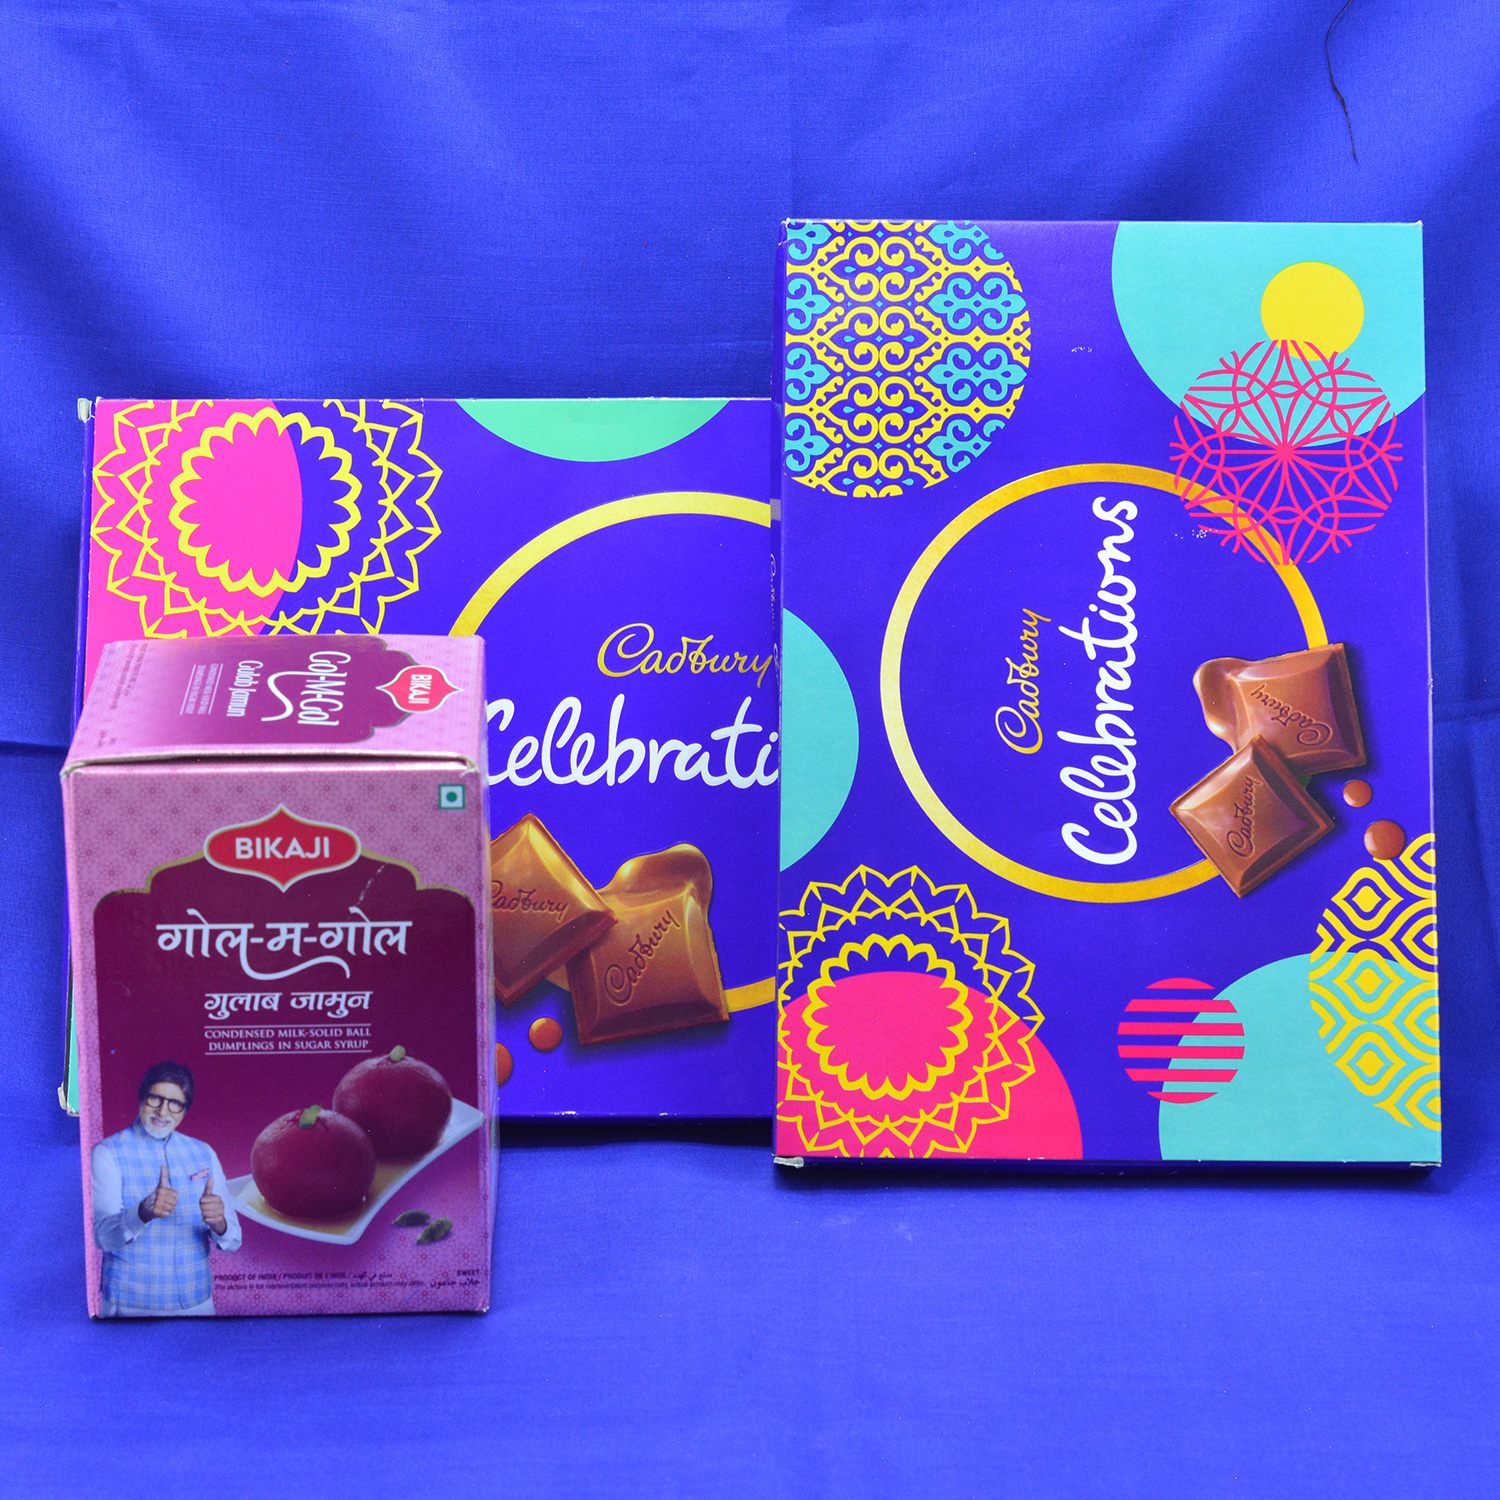 Delectable 2 Pcs Cadbury Celebrations with Tasty Bikaji Gol Matol Gulab Jamun